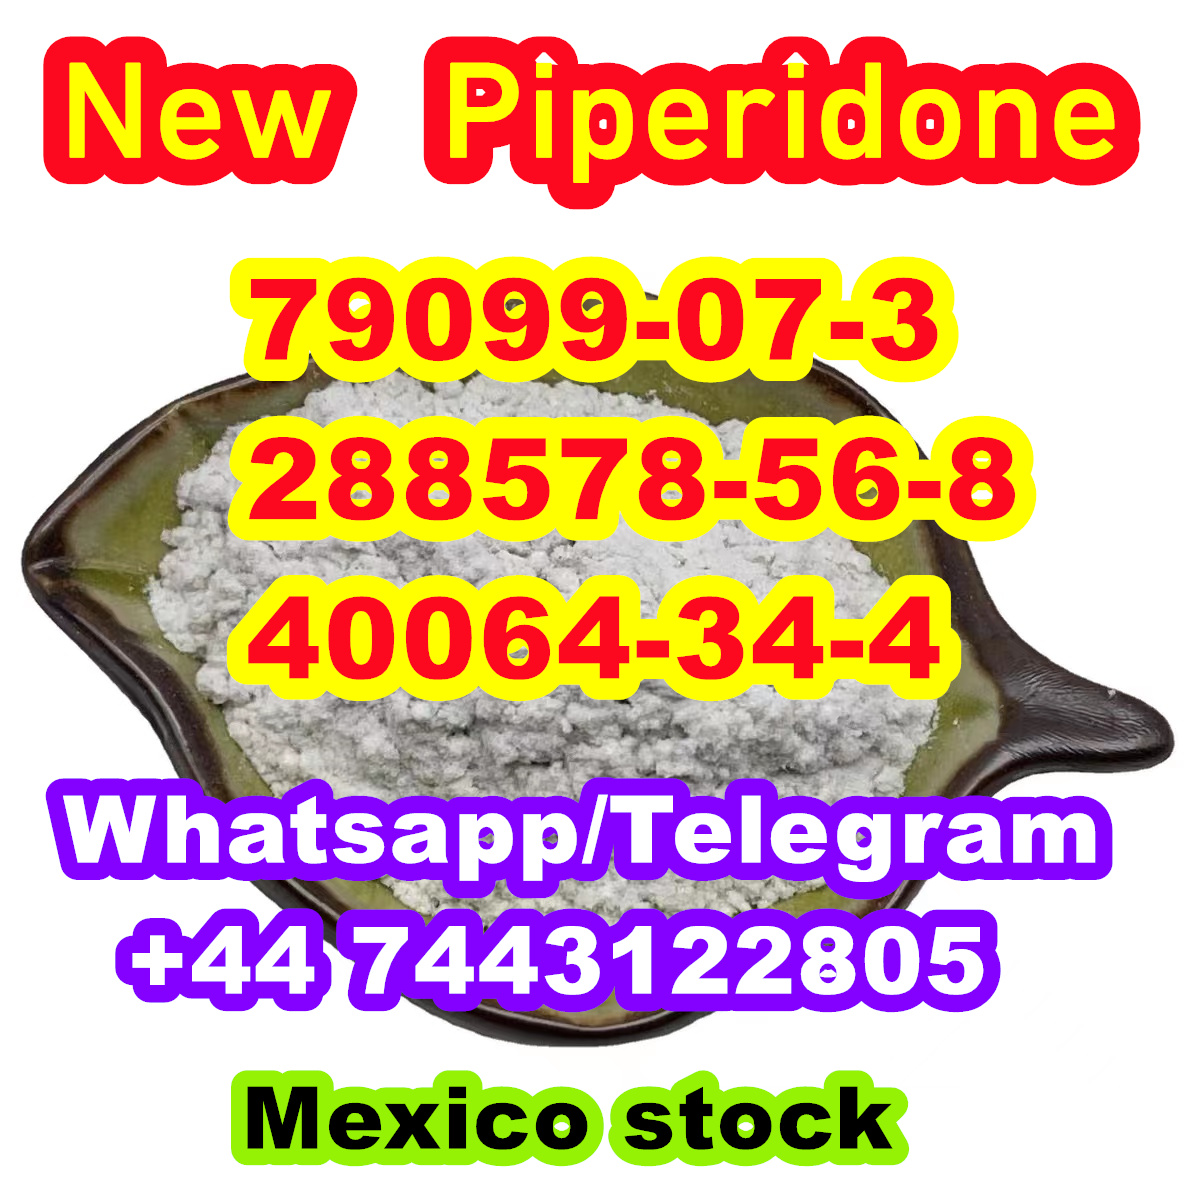  Piperidone CAS79099-07-3 safe shipping to Mexico